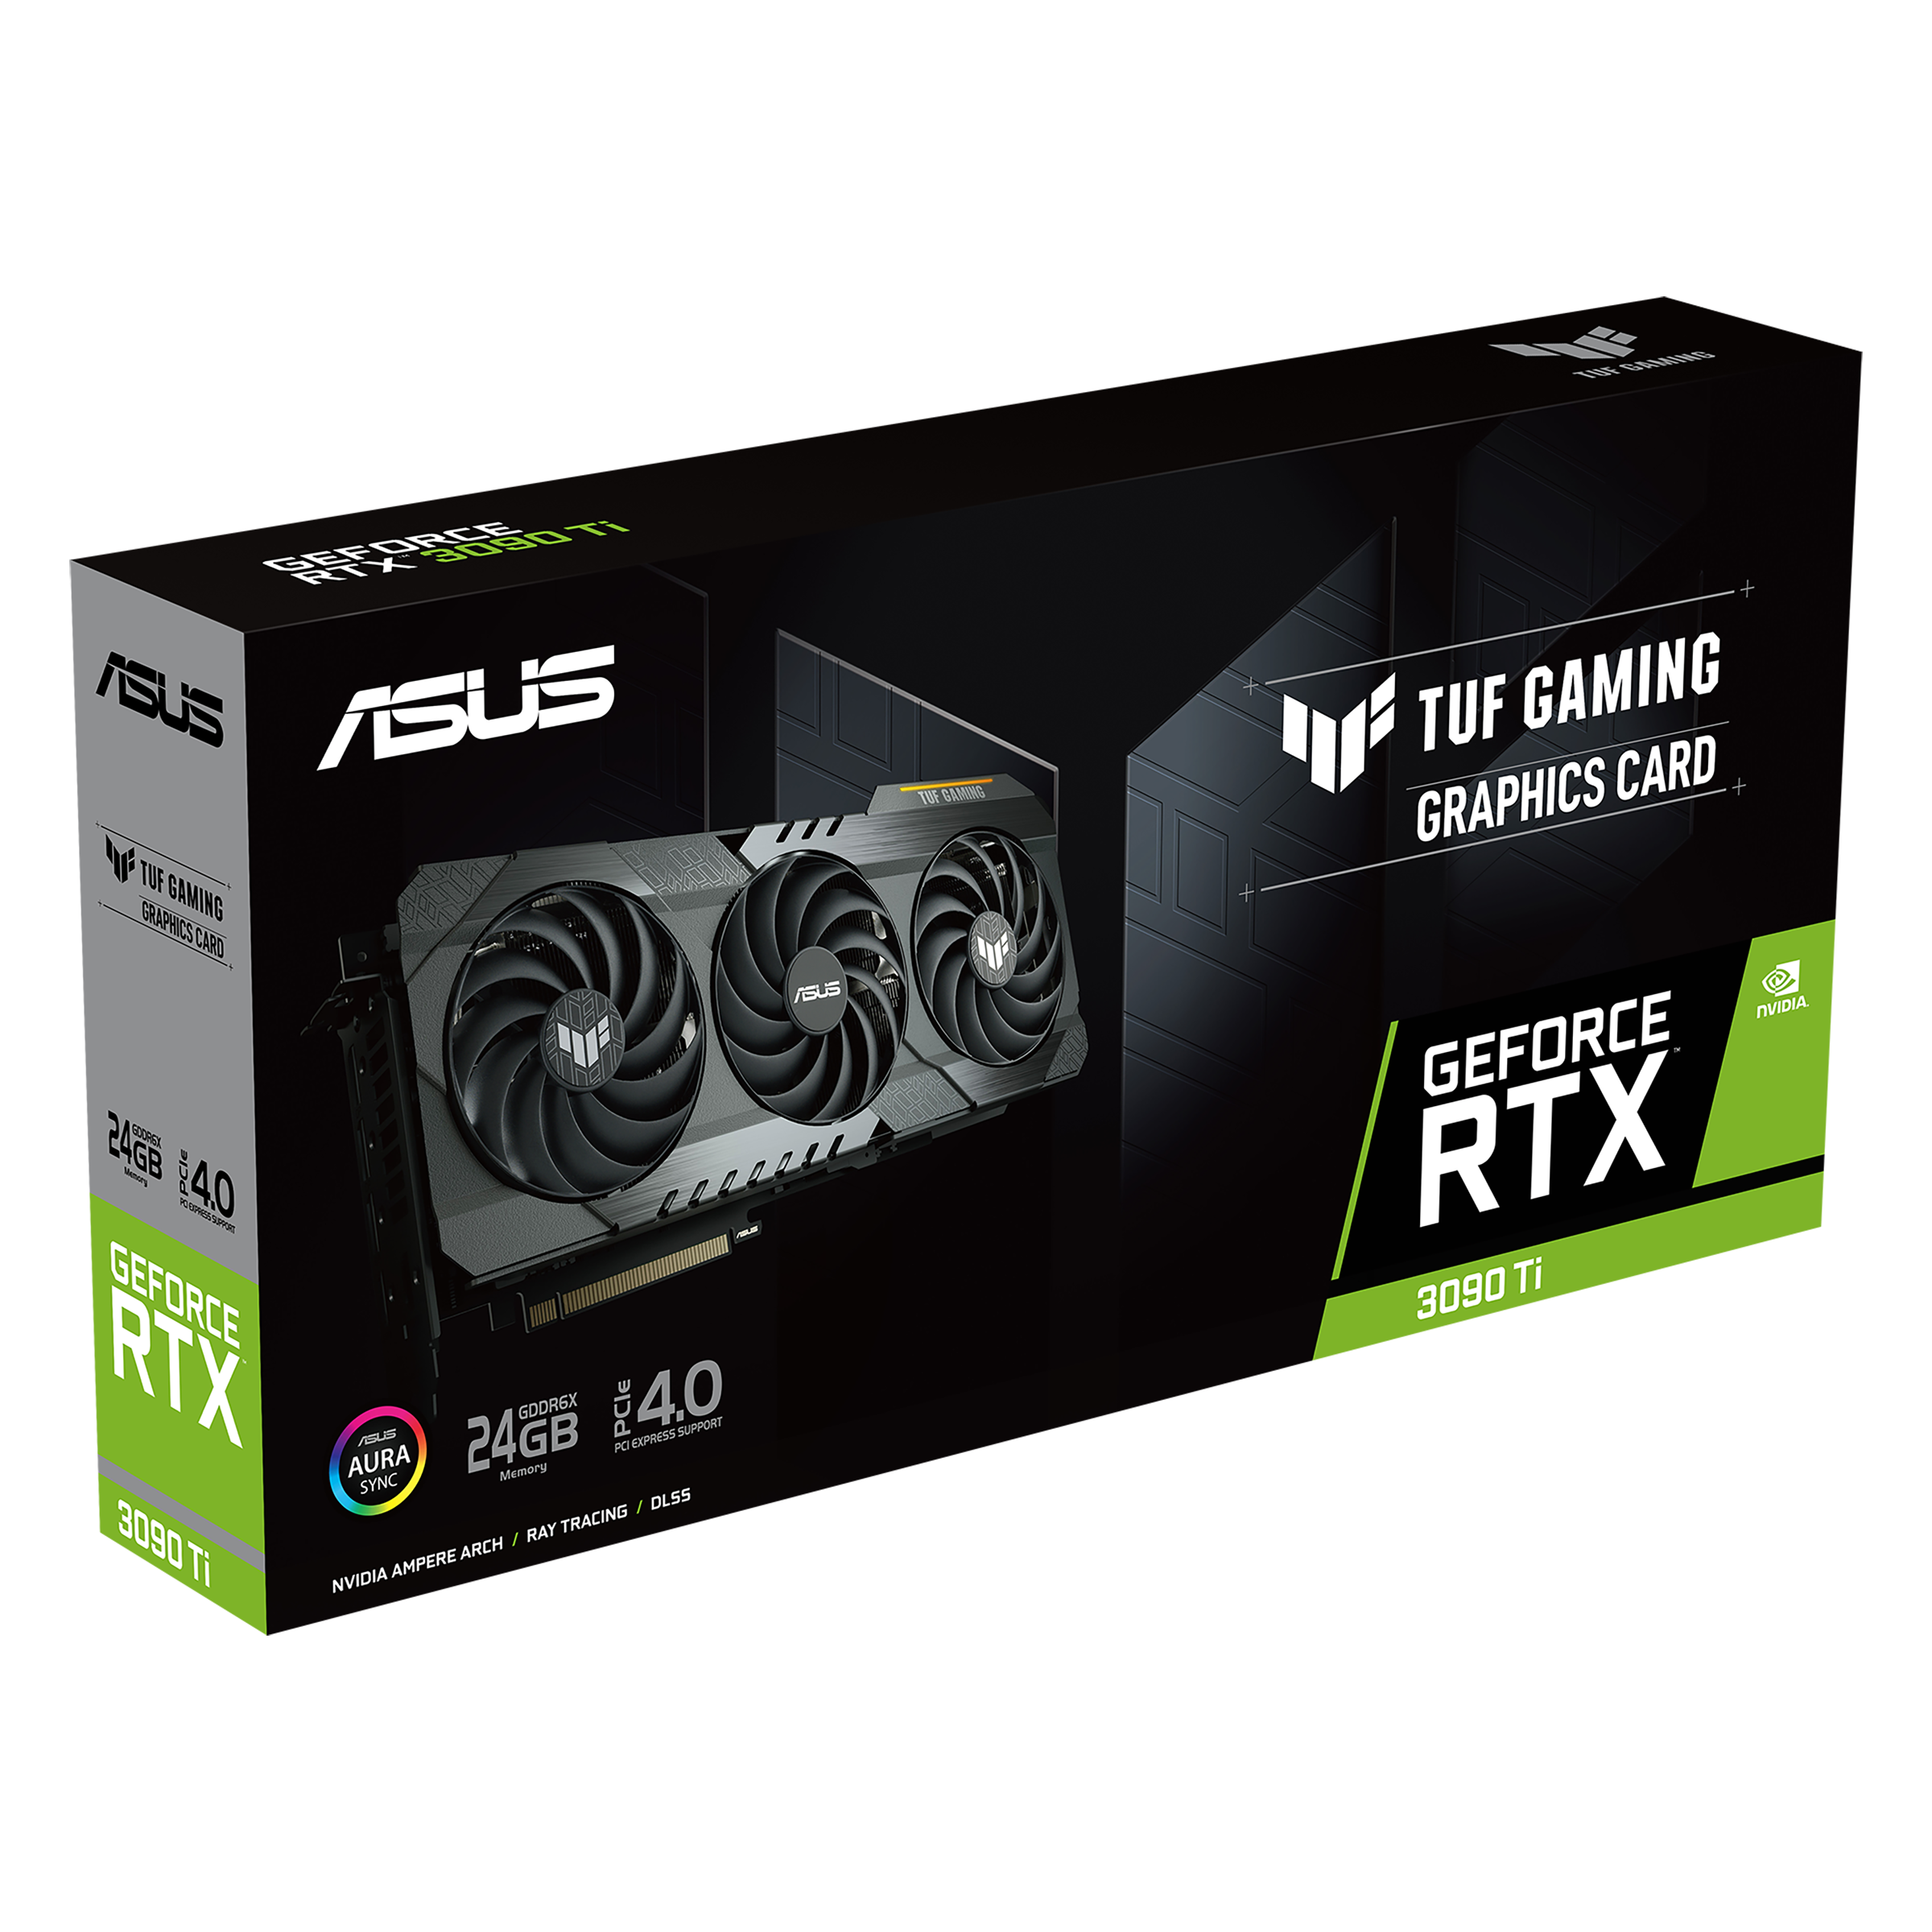 ASUS TUF Gaming GeForce RTX 3090 Ti 24GB GDDR6X | Graphics Card 